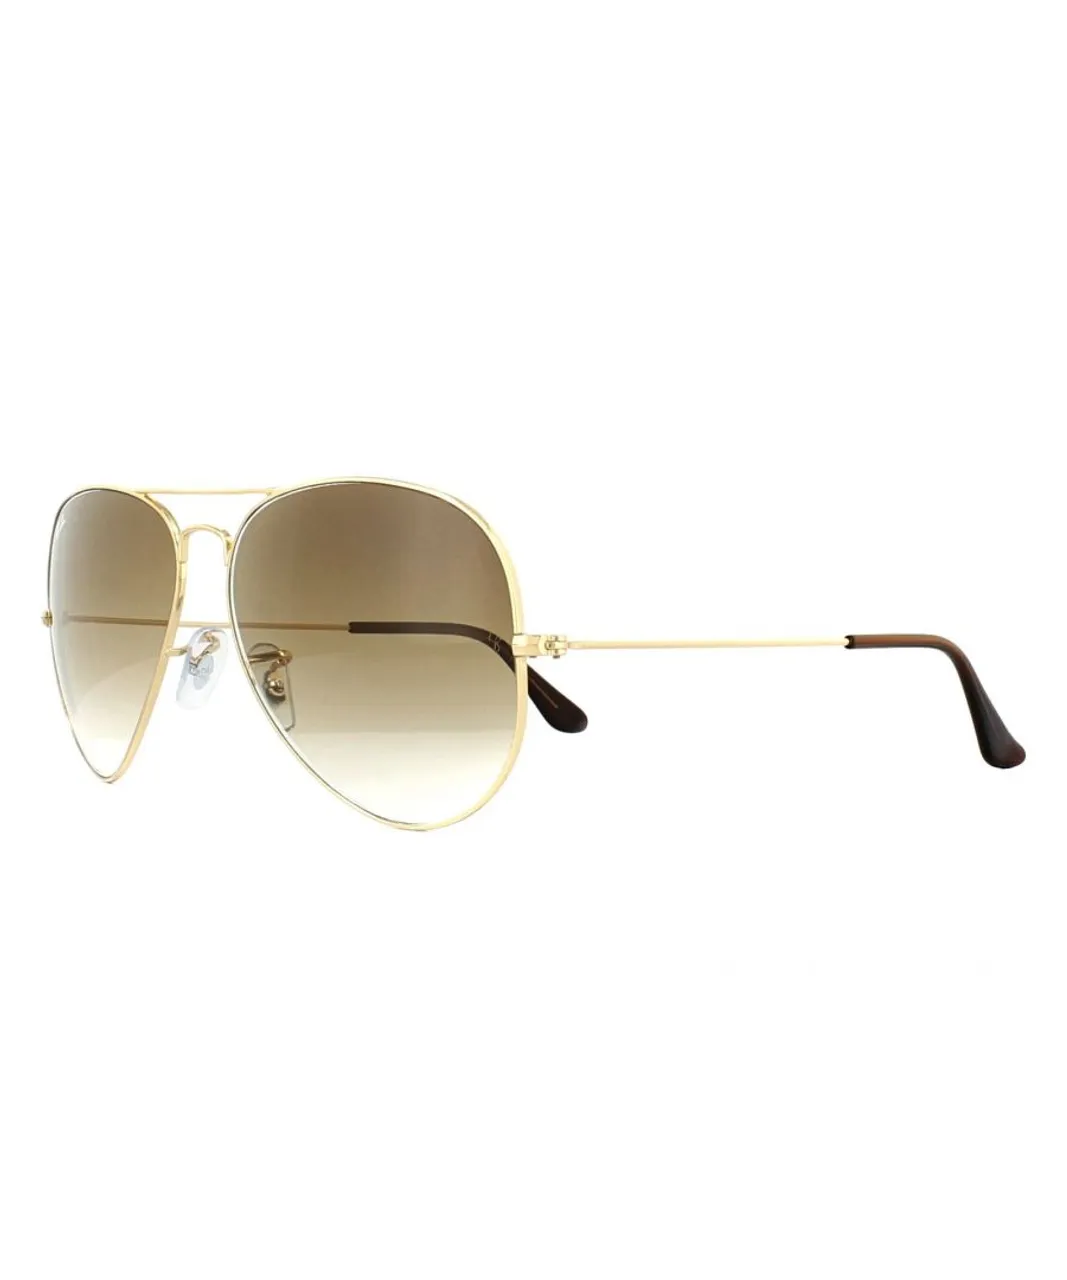 Ray-Ban Mens Sunglasses Aviator 3025 Gold Brown Gradient 001/51 Metal - One